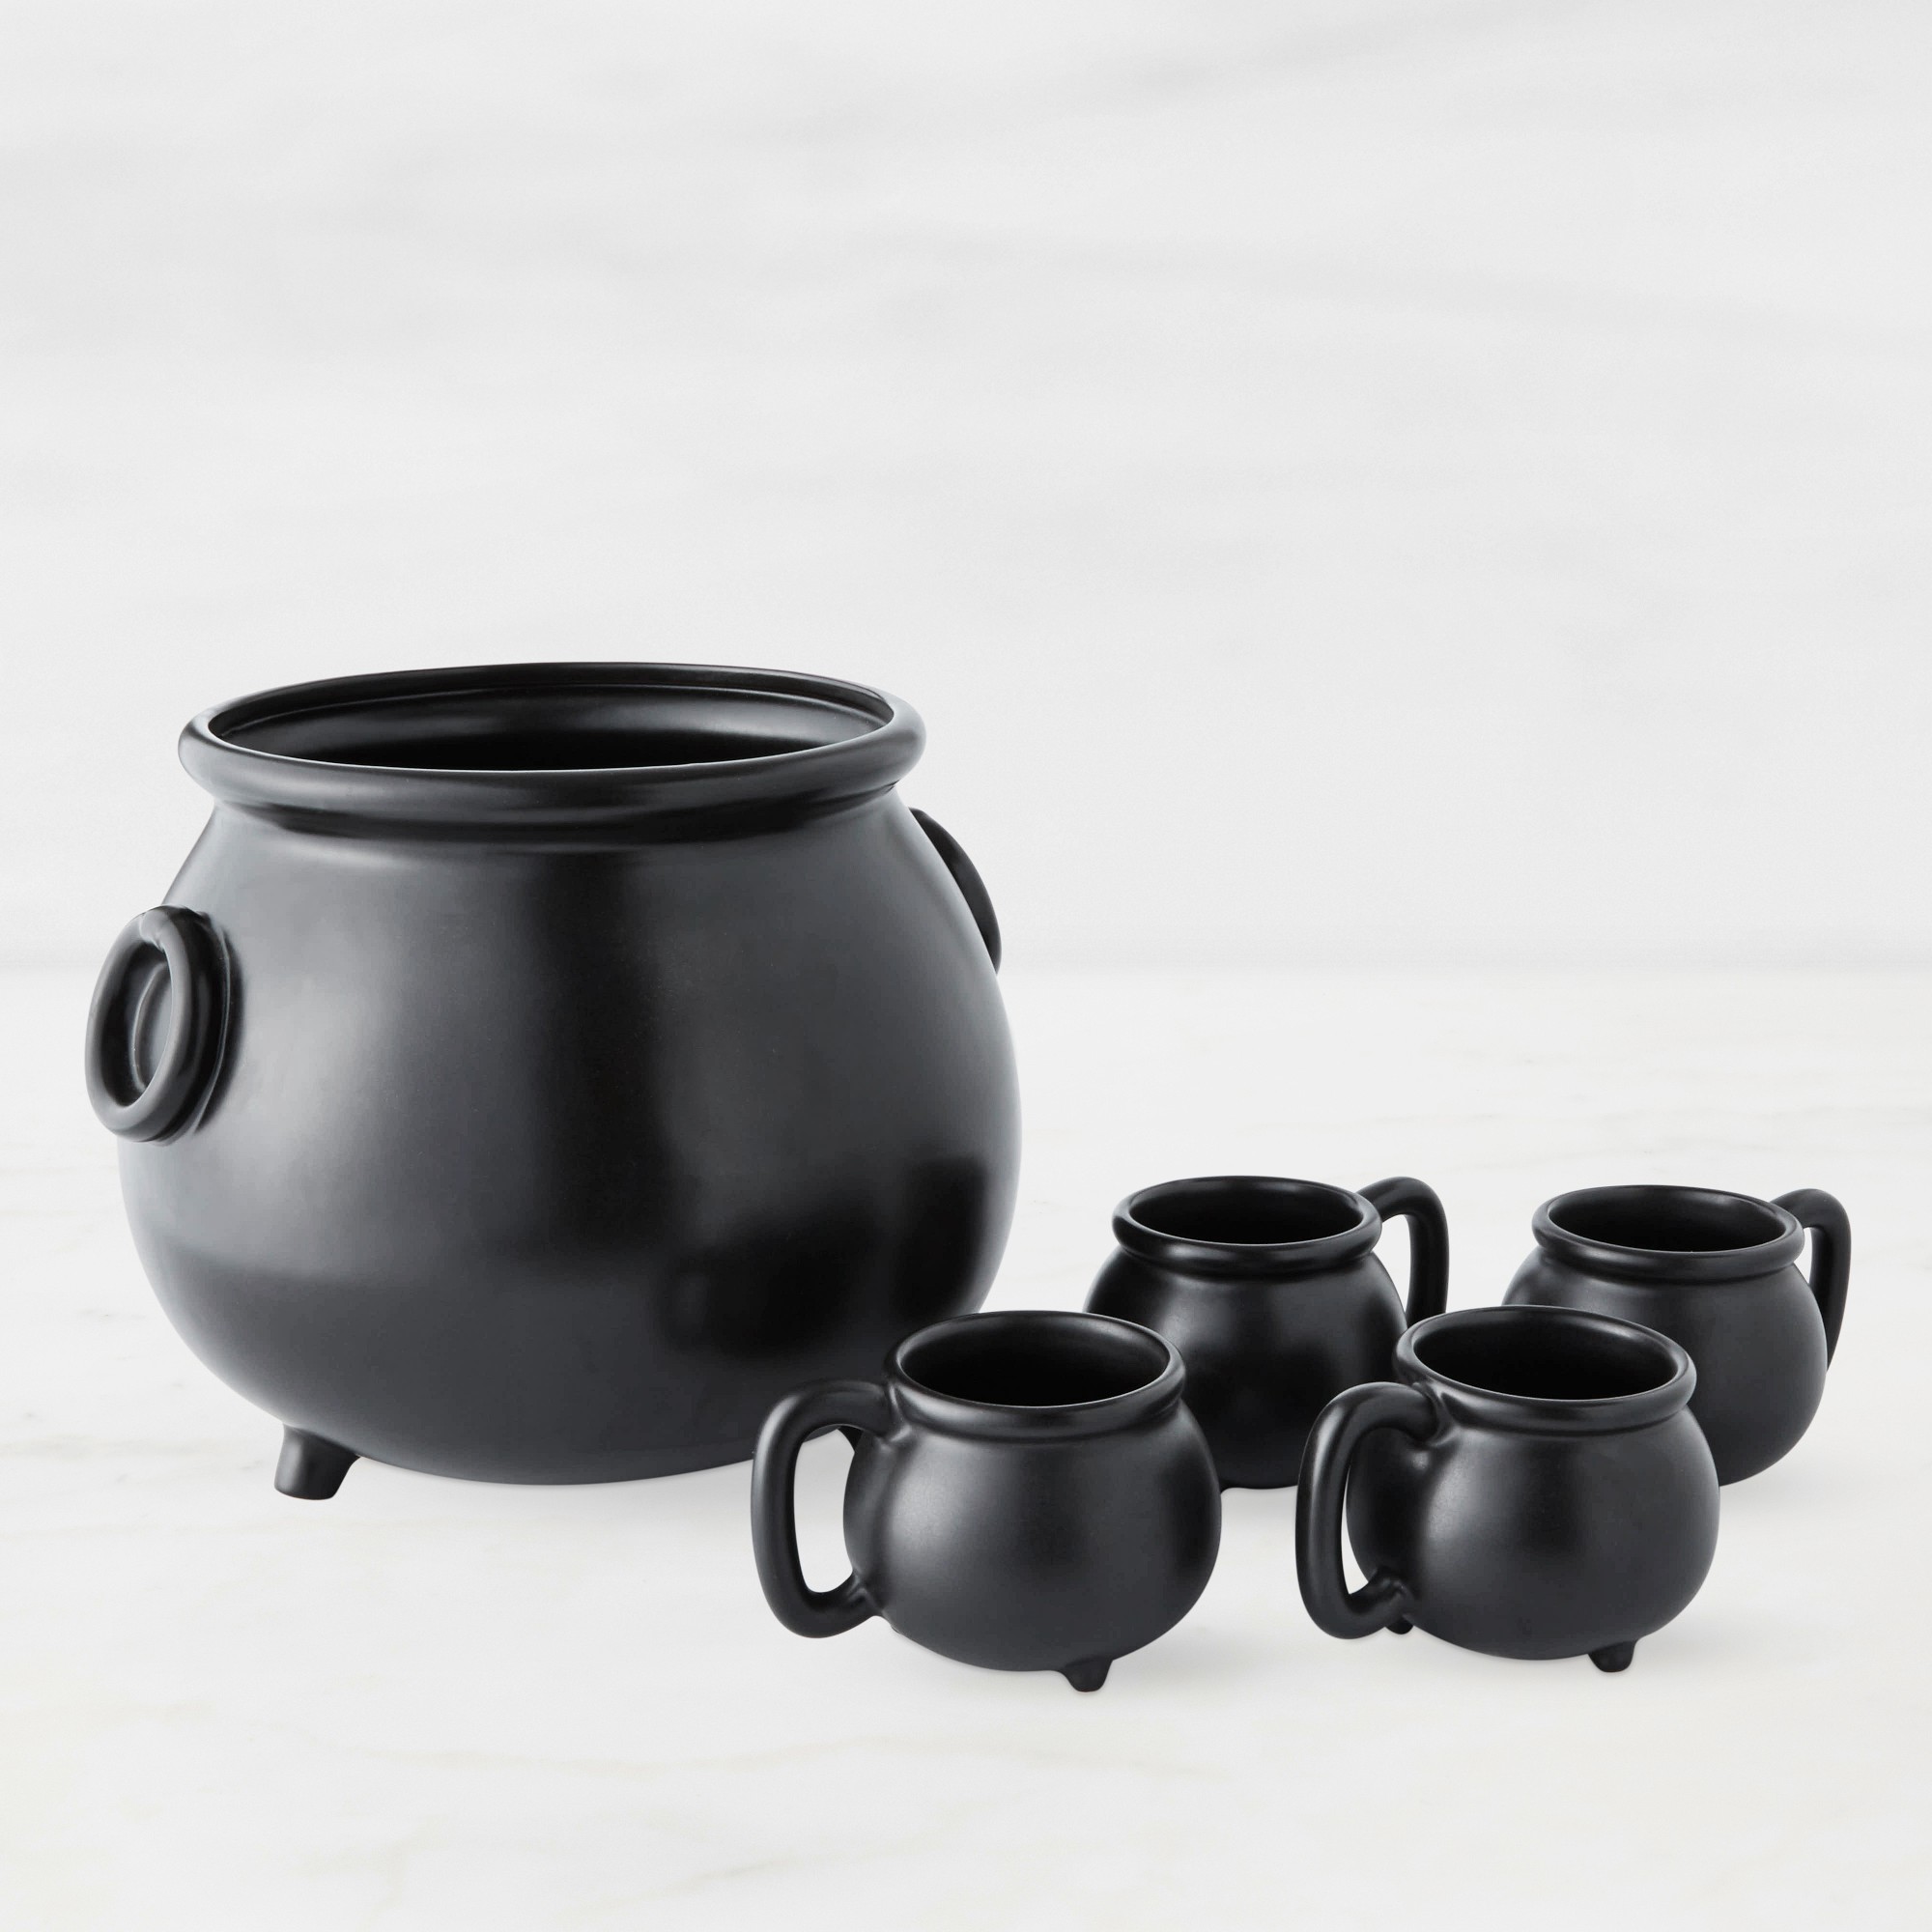 Cauldron Serving Bowls and Mugs, Set of 4